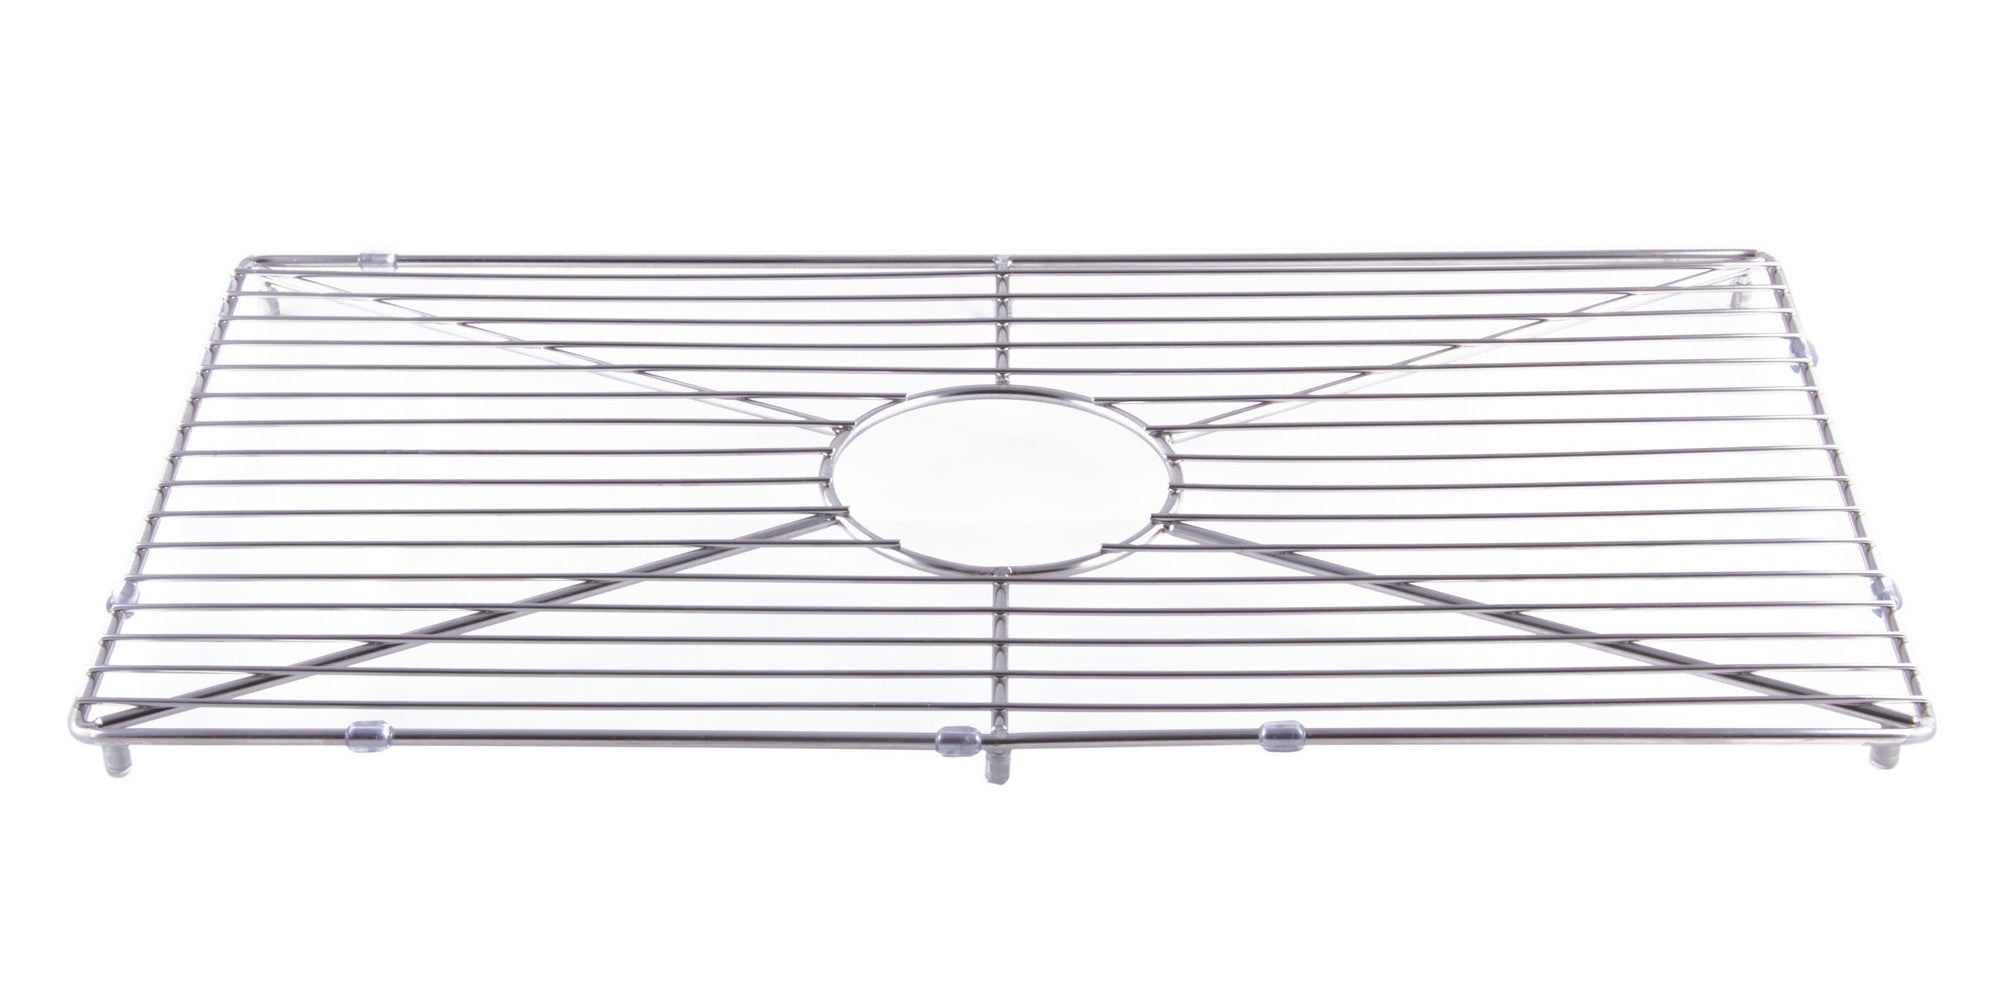 ALFI Brand - Stainless steel kitchen sink grid for AB3018SB, AB3018ARCH, AB3018UM | ABGR3018